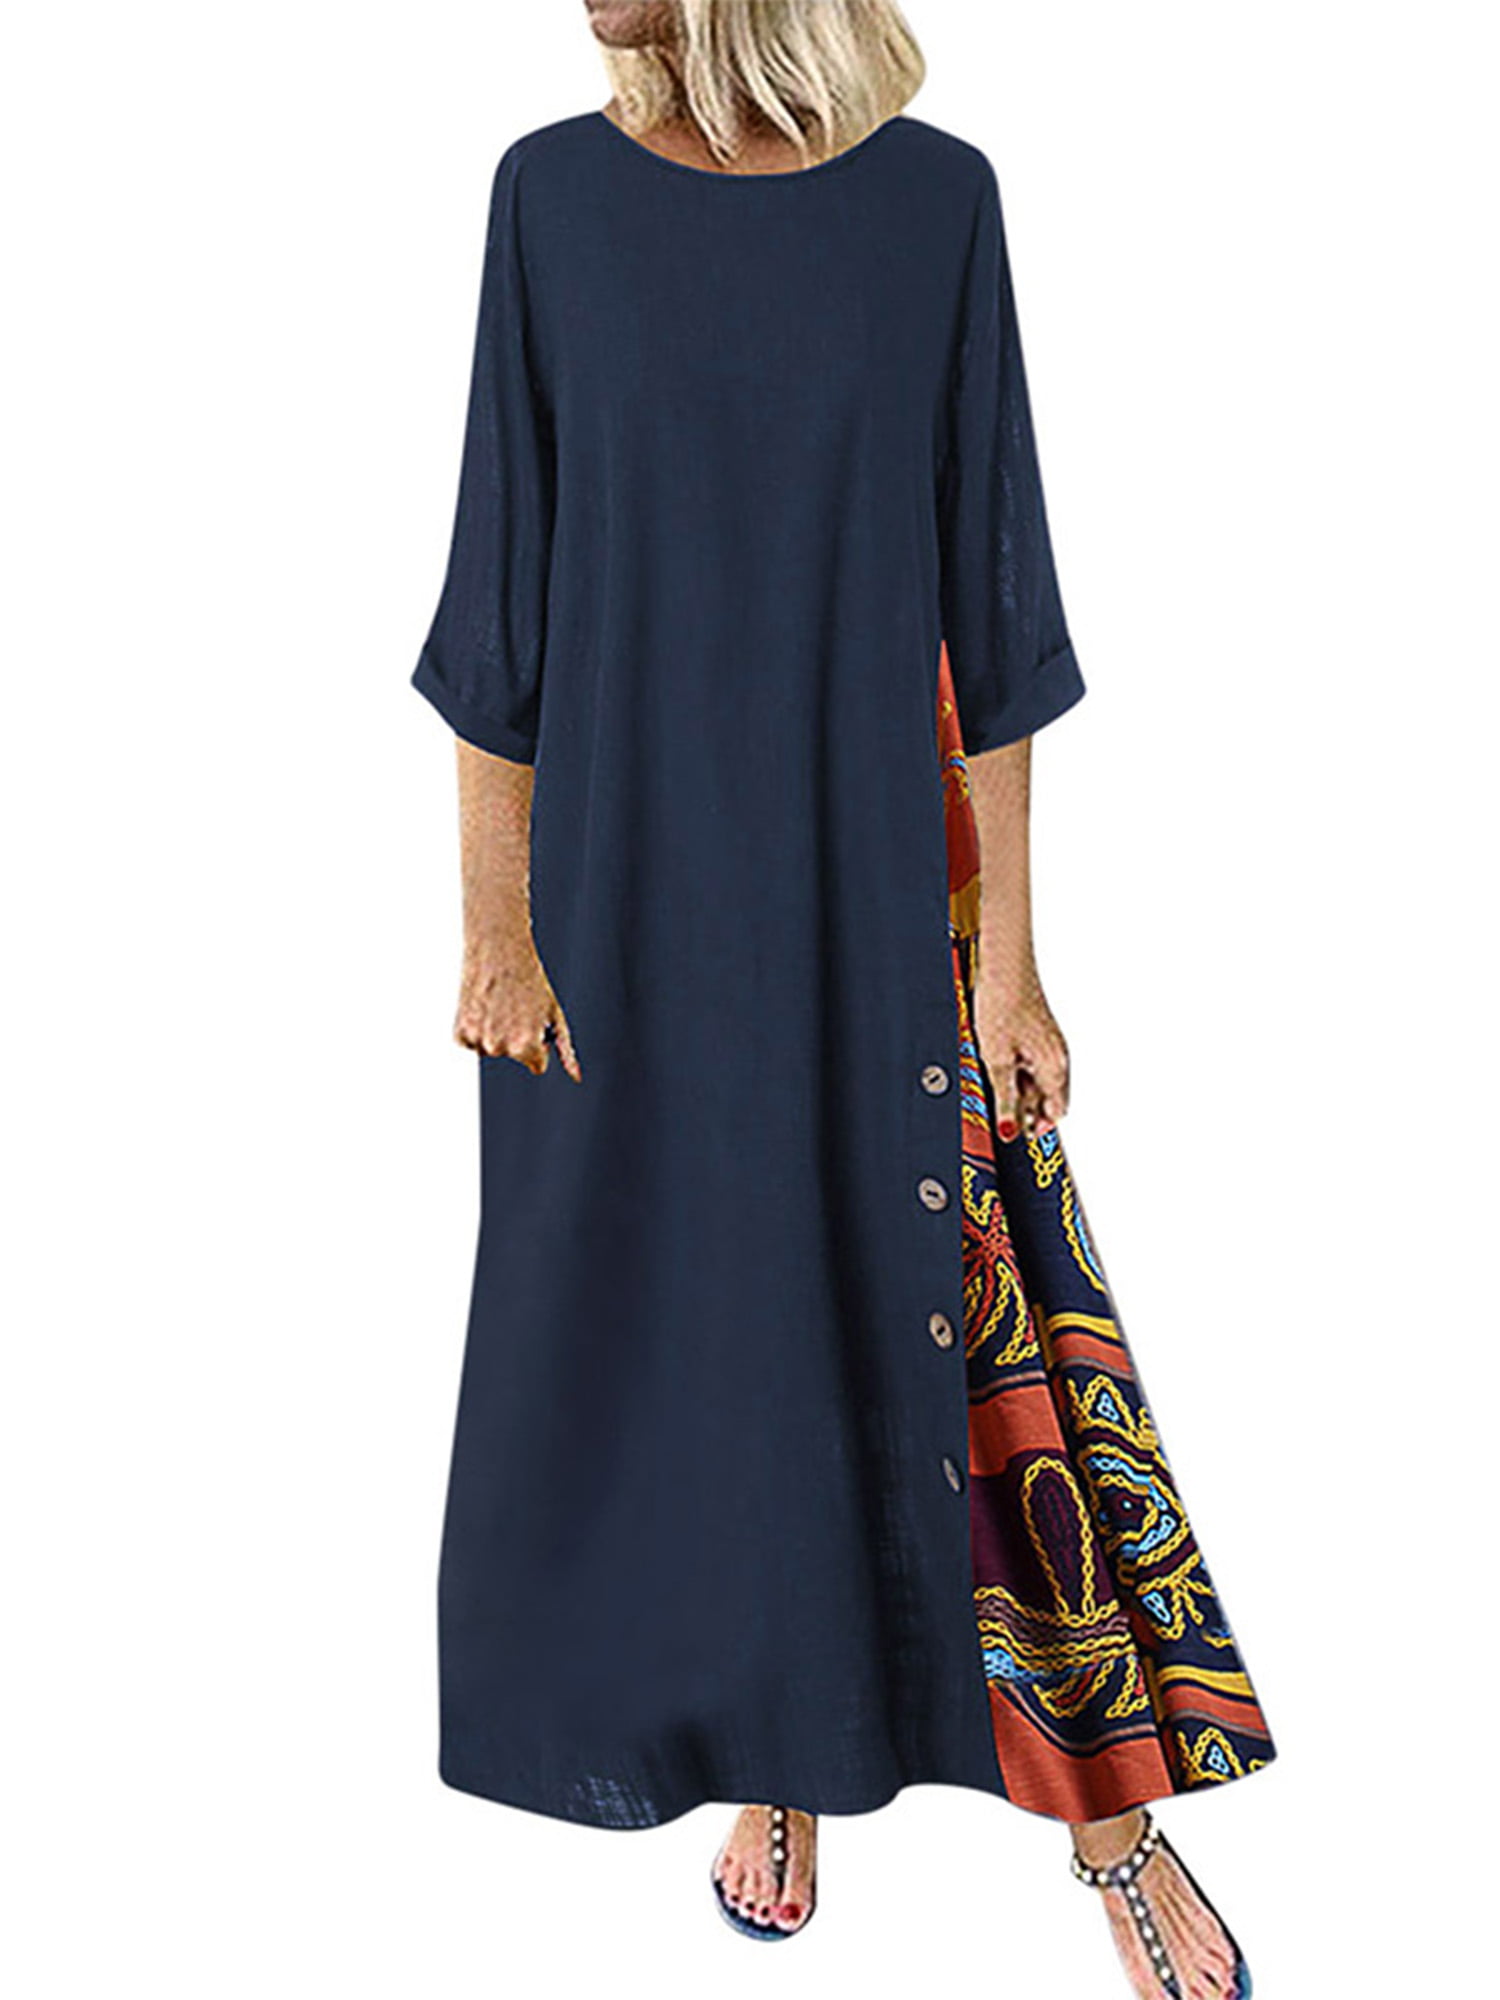 KIDSFORM Women Casual Loose Dress Vintage Long Sleeve Maxi Dresses Cotton Linen Oversize Printed Autumn 